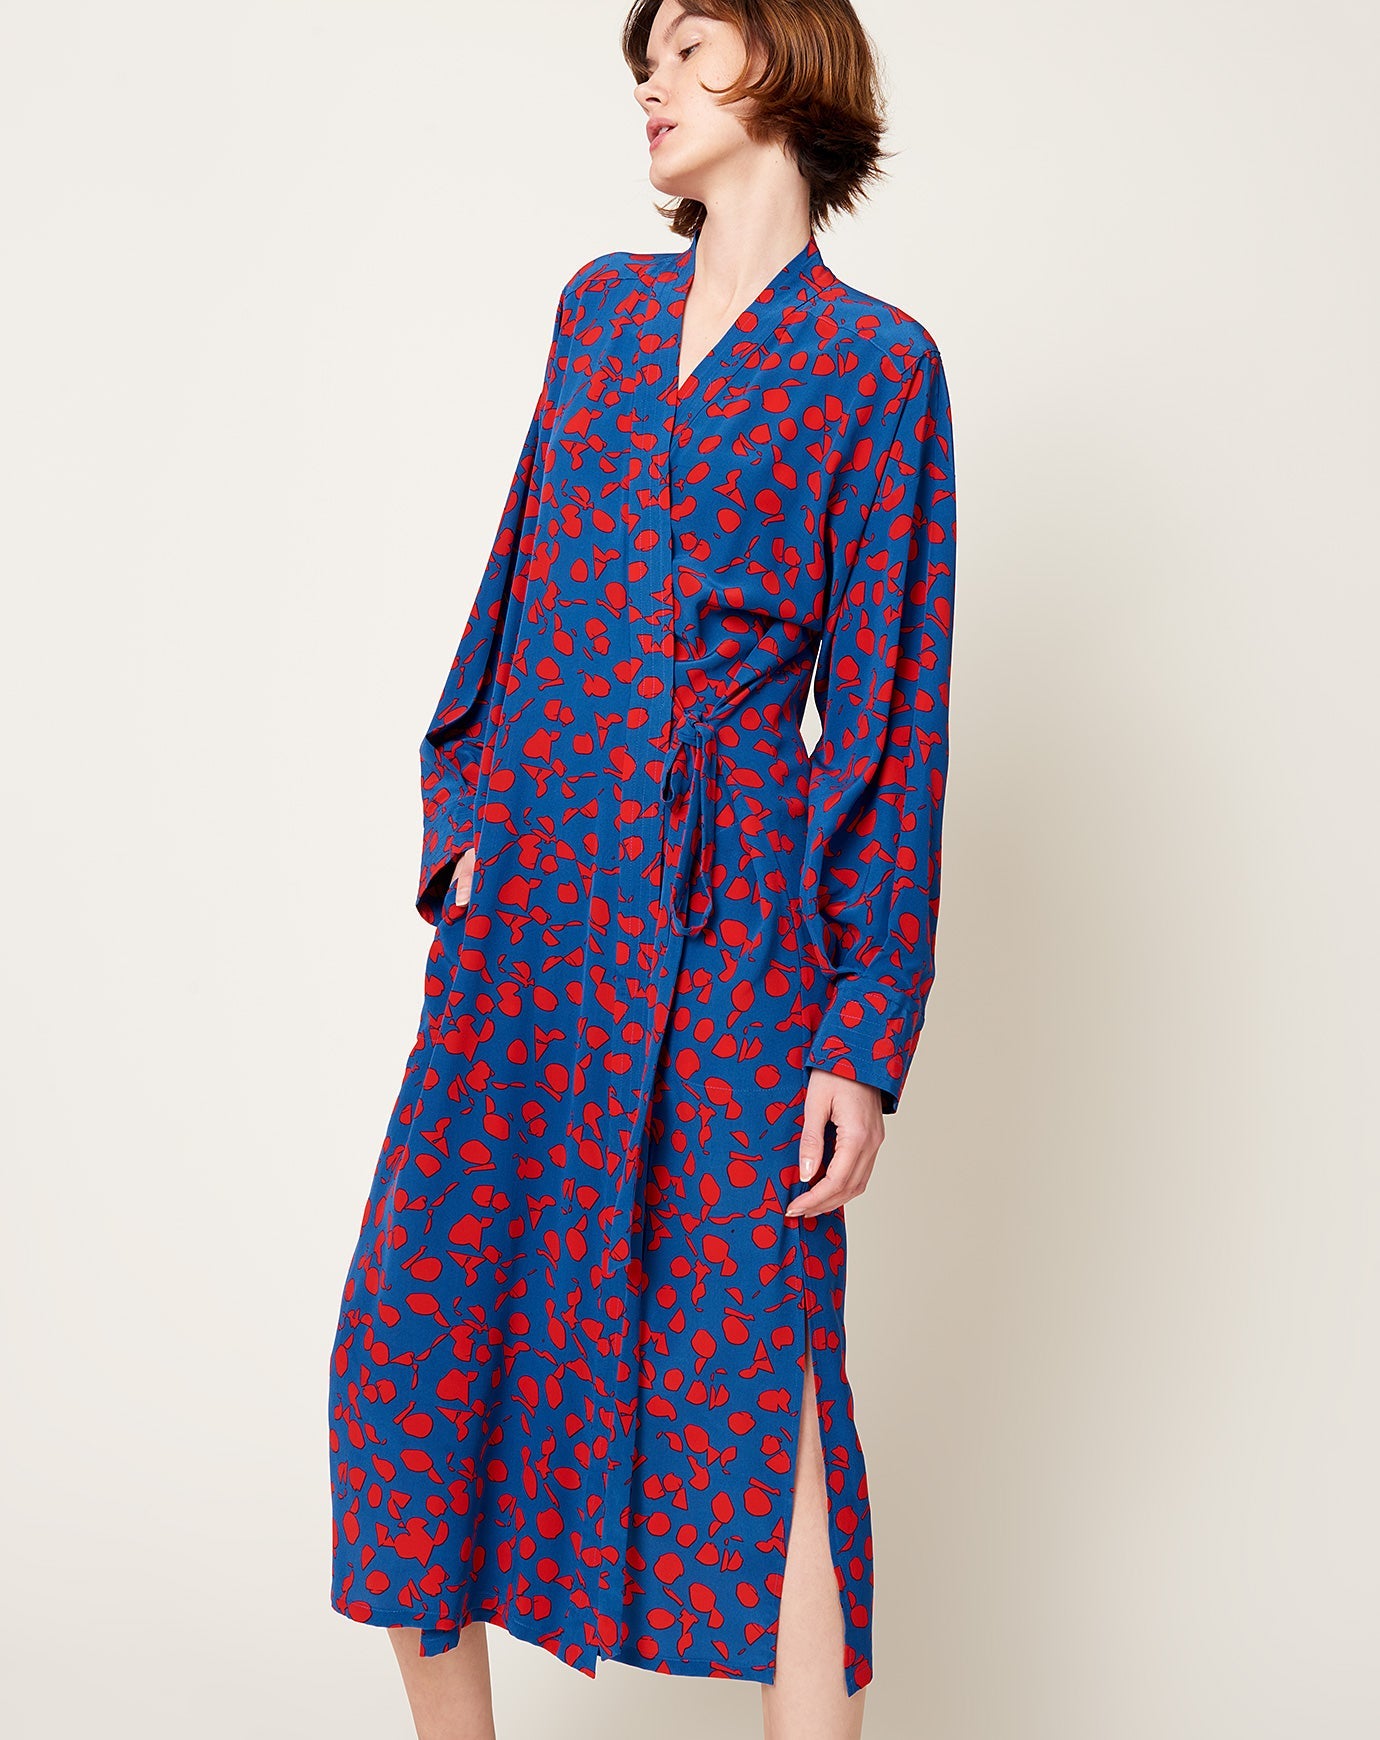 Rachel Comey Tibbs Dress in Blue Dot Collage